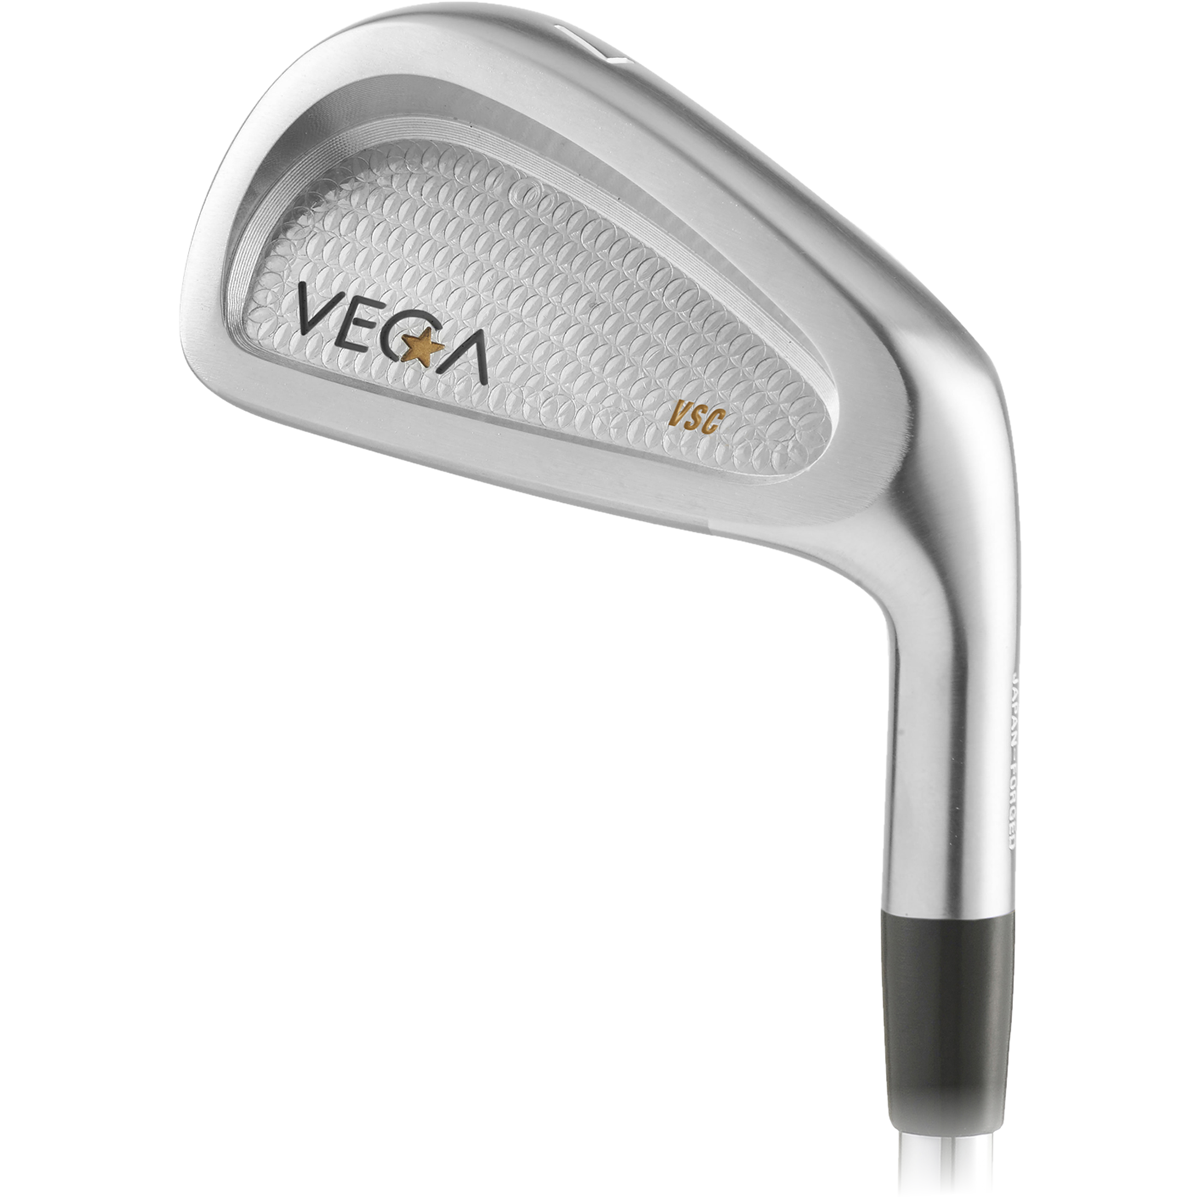 Vega VSC Irons image 1